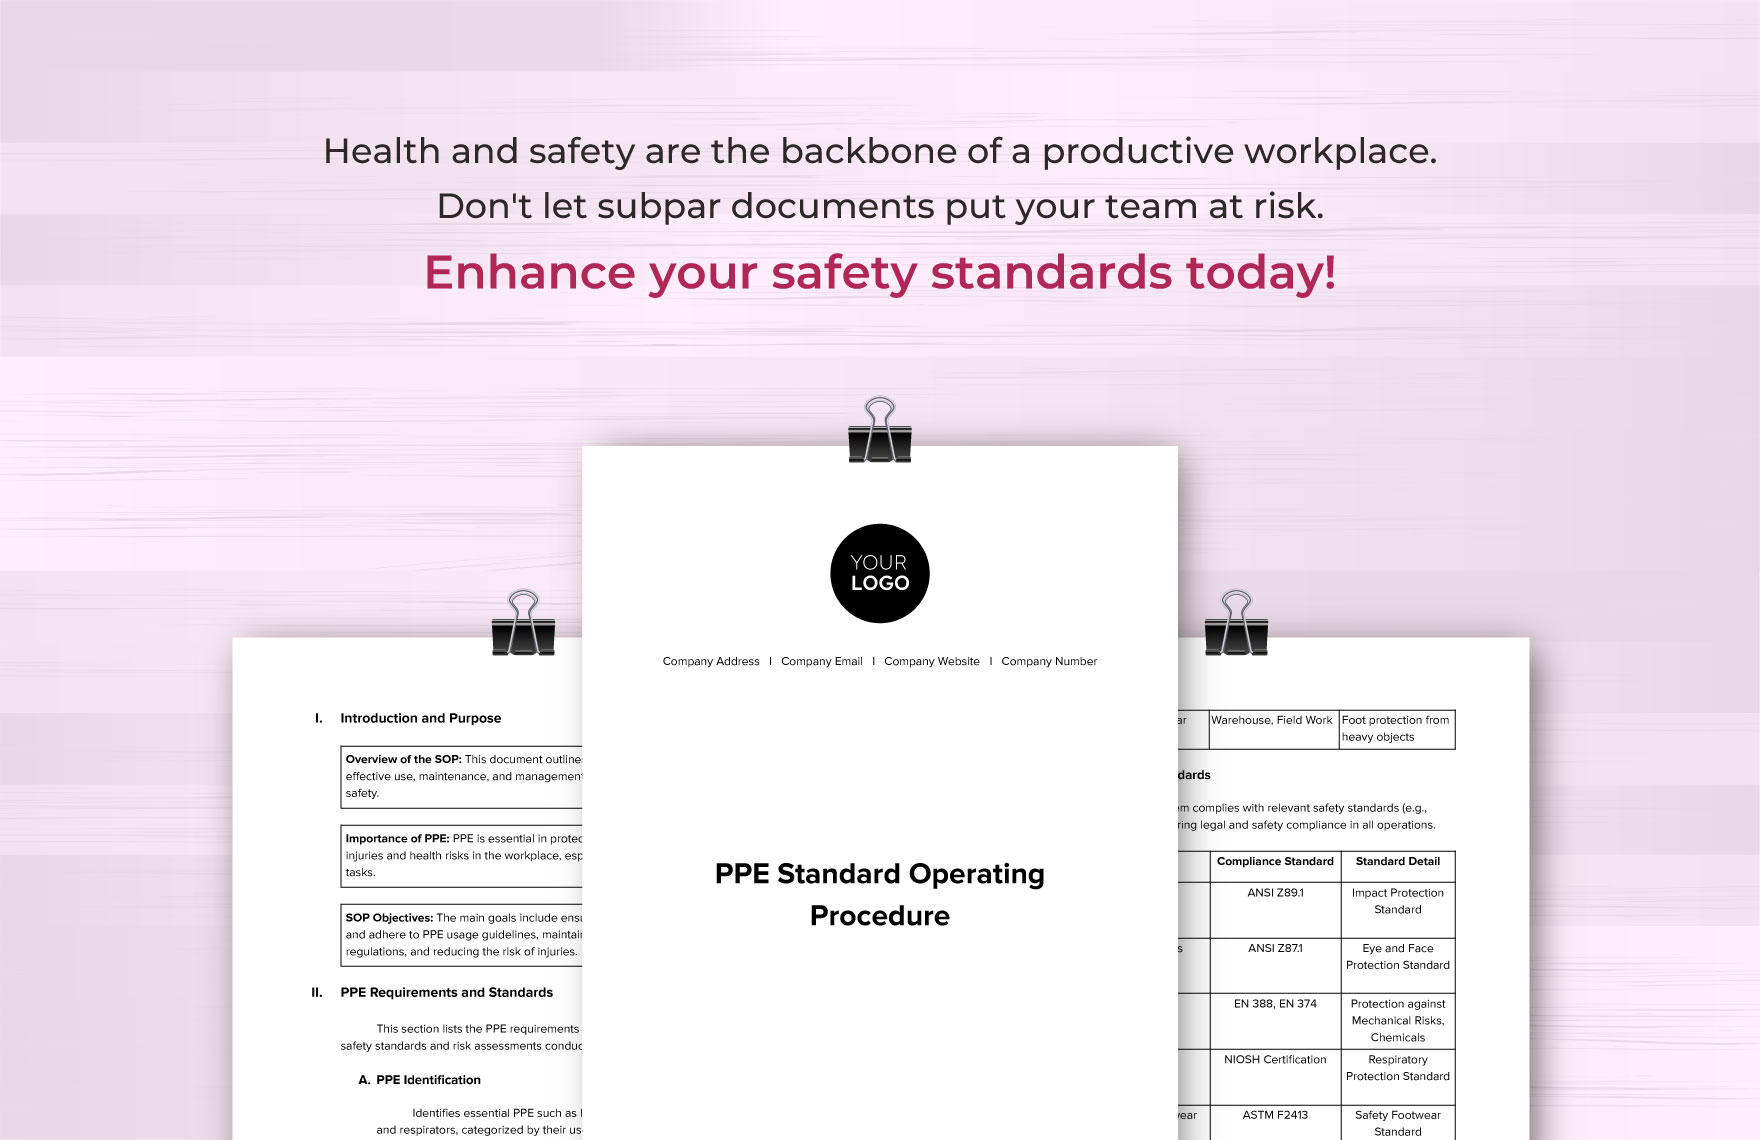 PPE Standard Operating Procedure Template